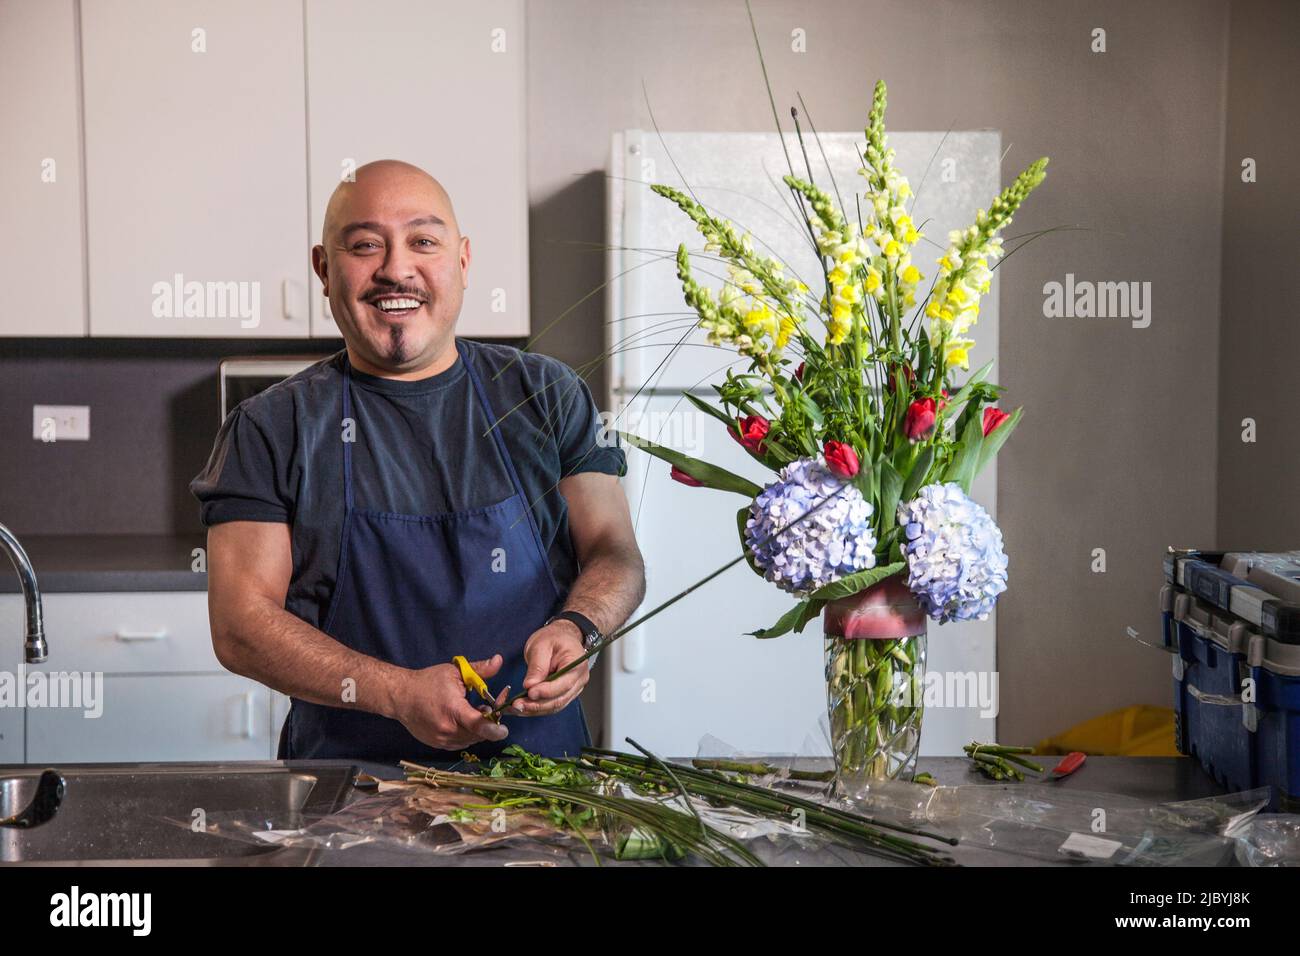 Smiling man arranging flowers in kitchen Banque D'Images